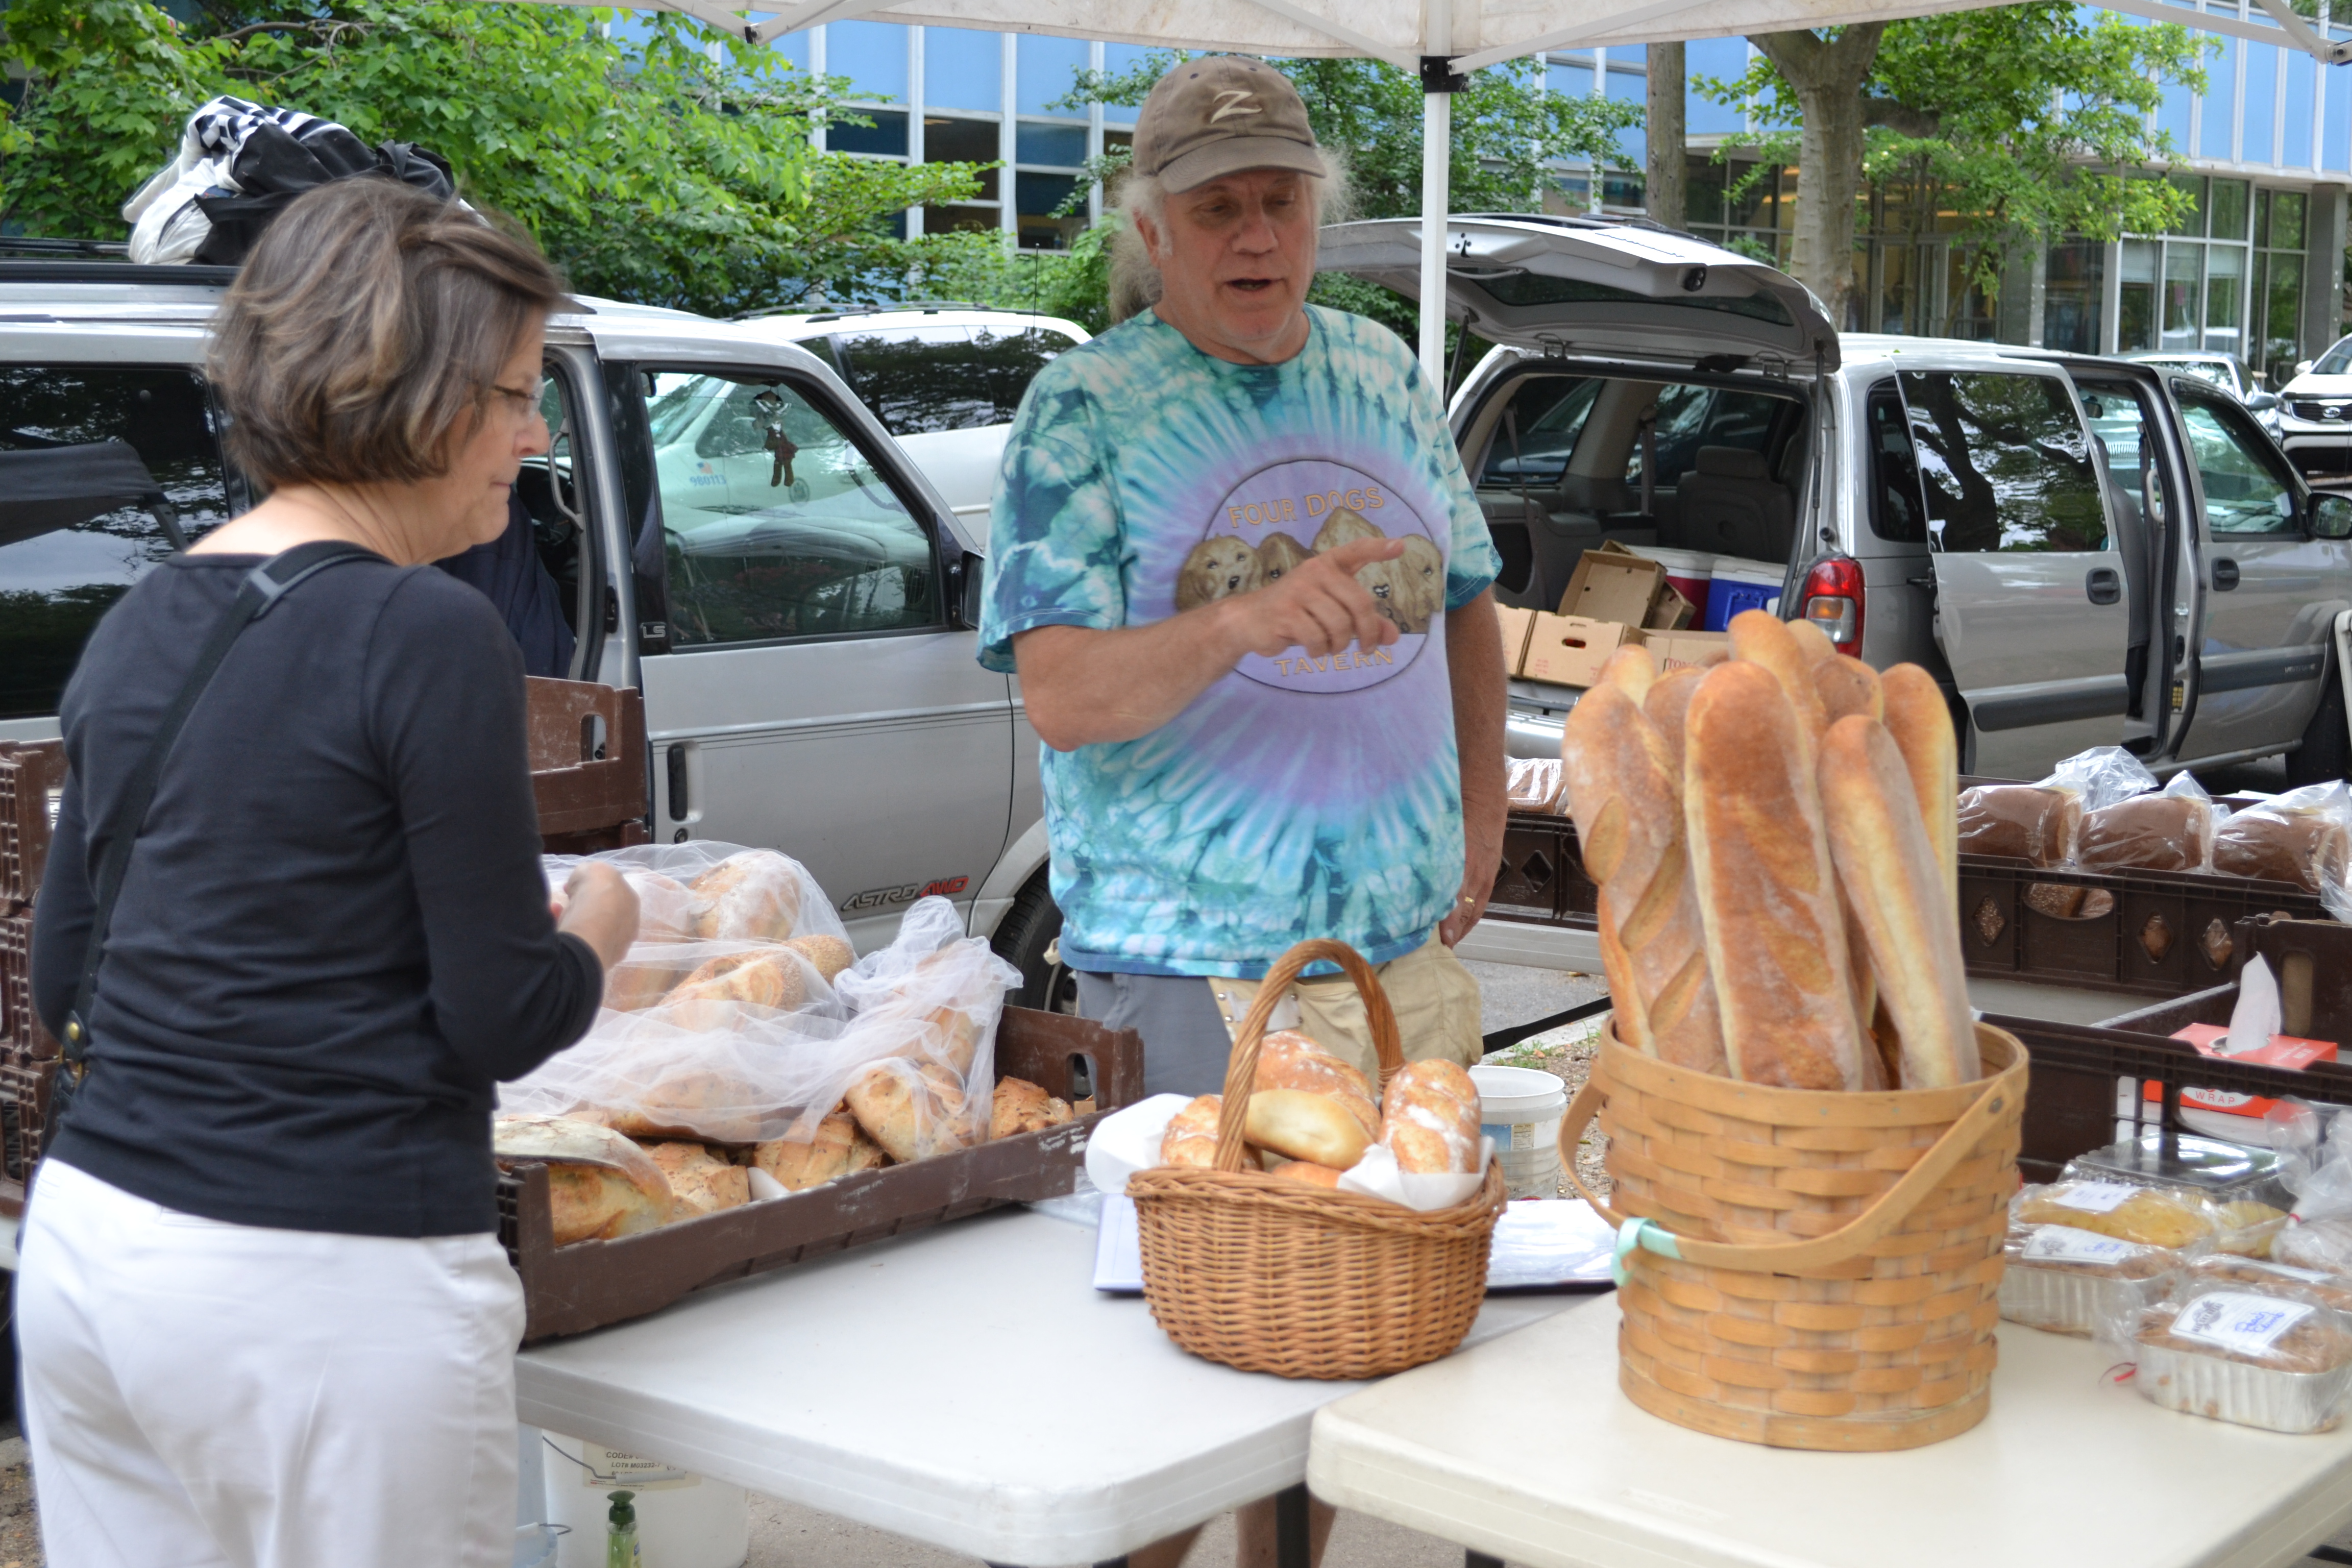 The Thursday farmers market returned to Clark Park this week